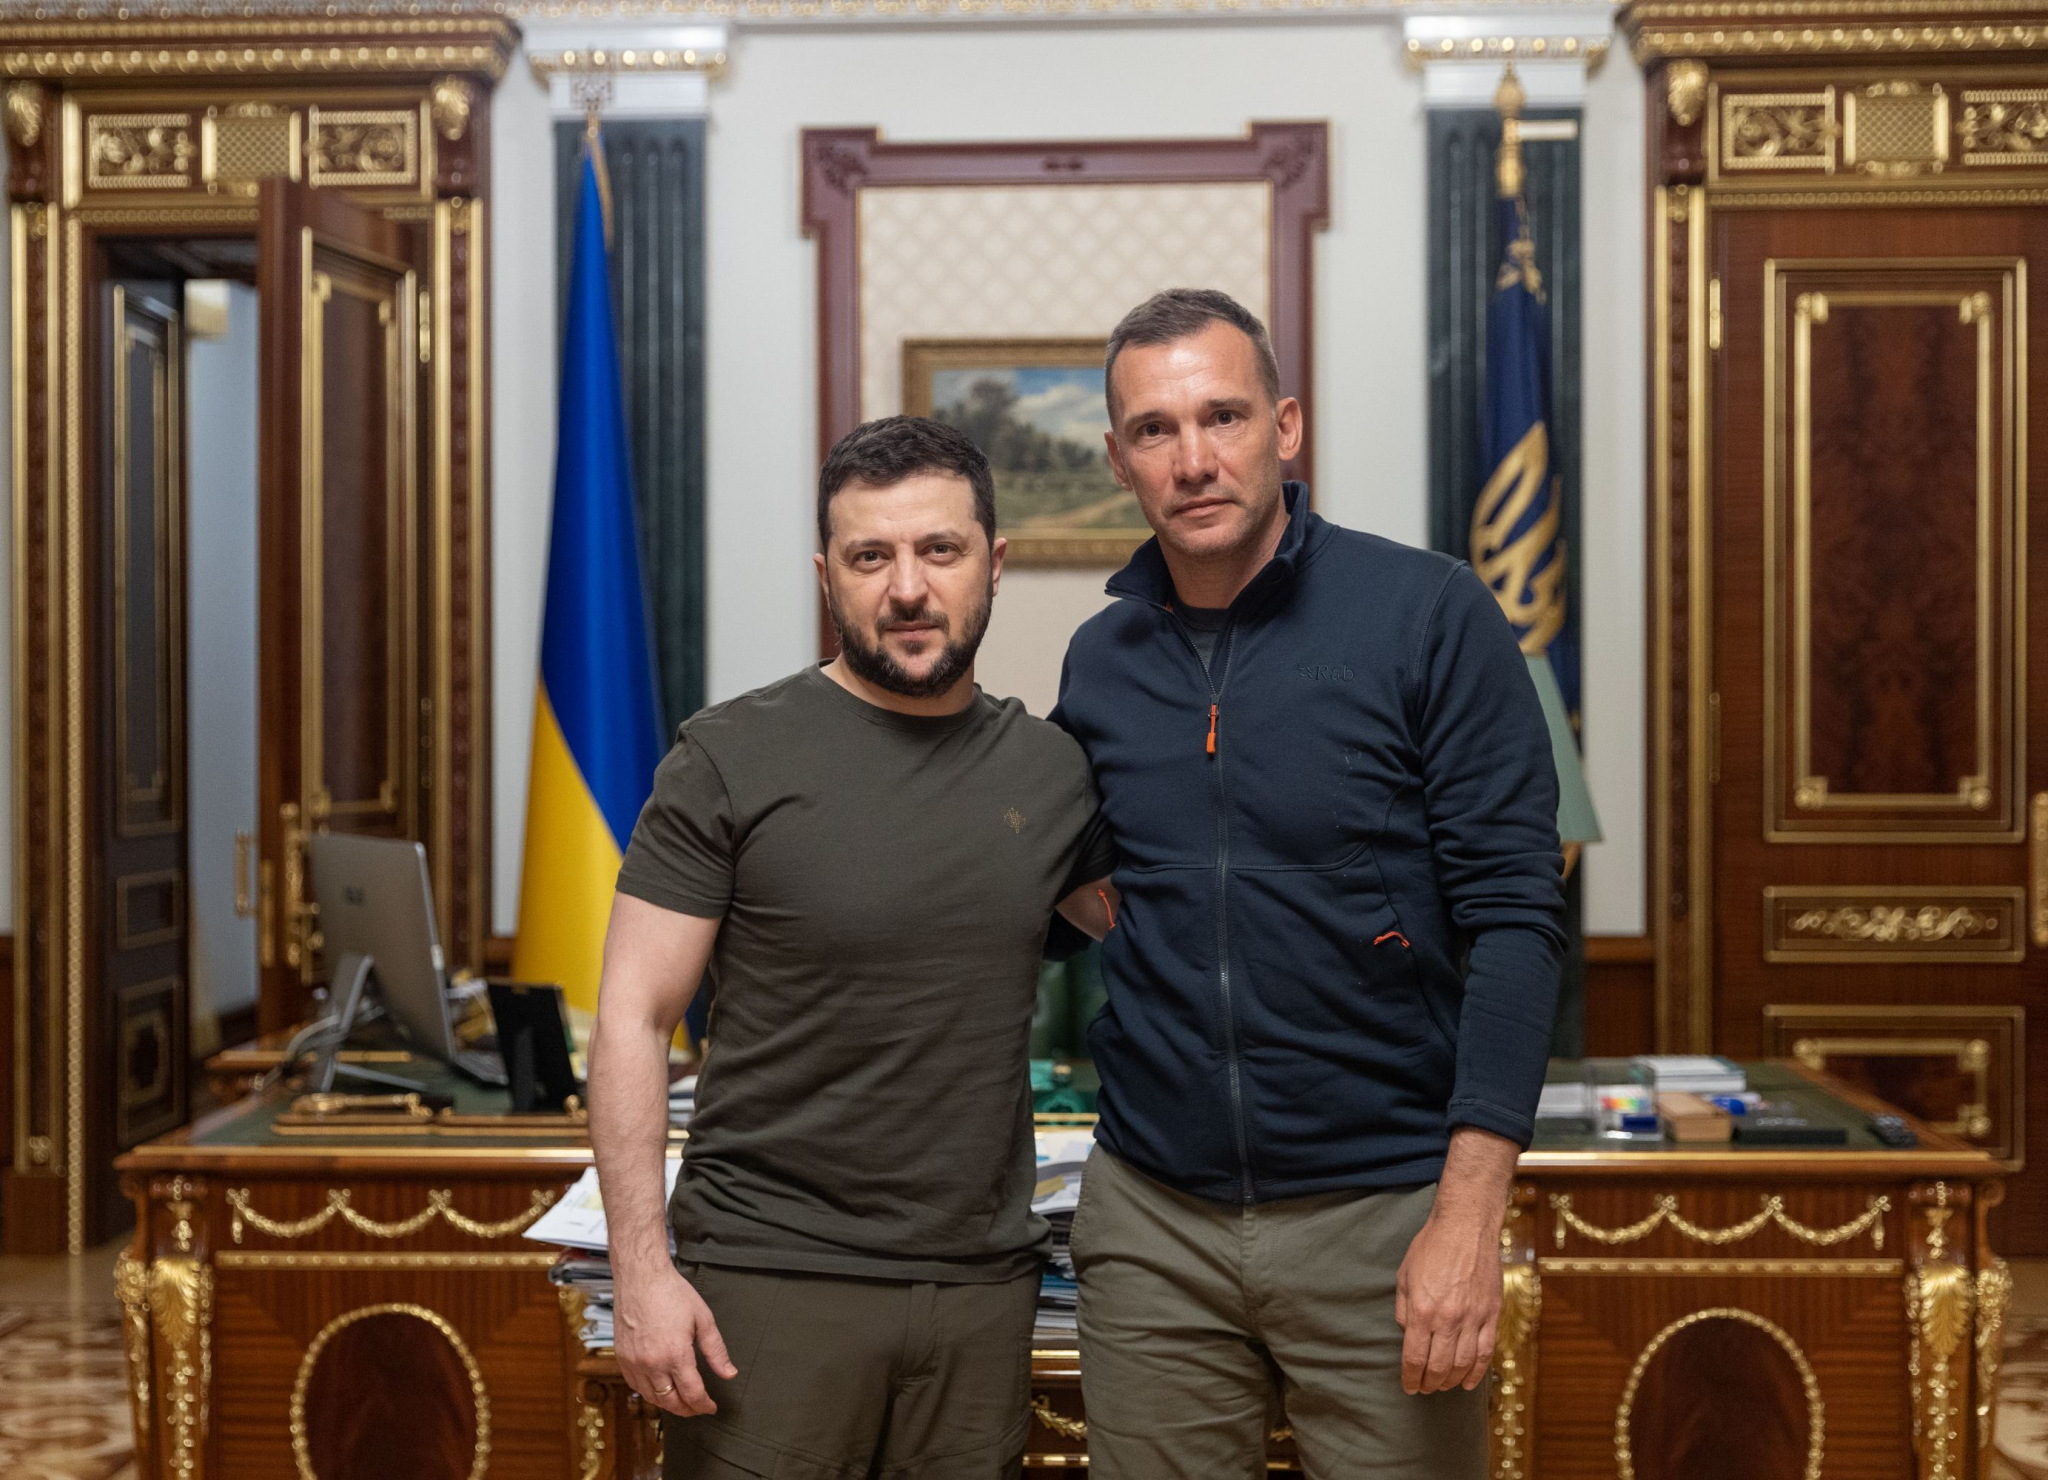 Ukraine President names Shevchenko first ambassador for fundraising platform United24 